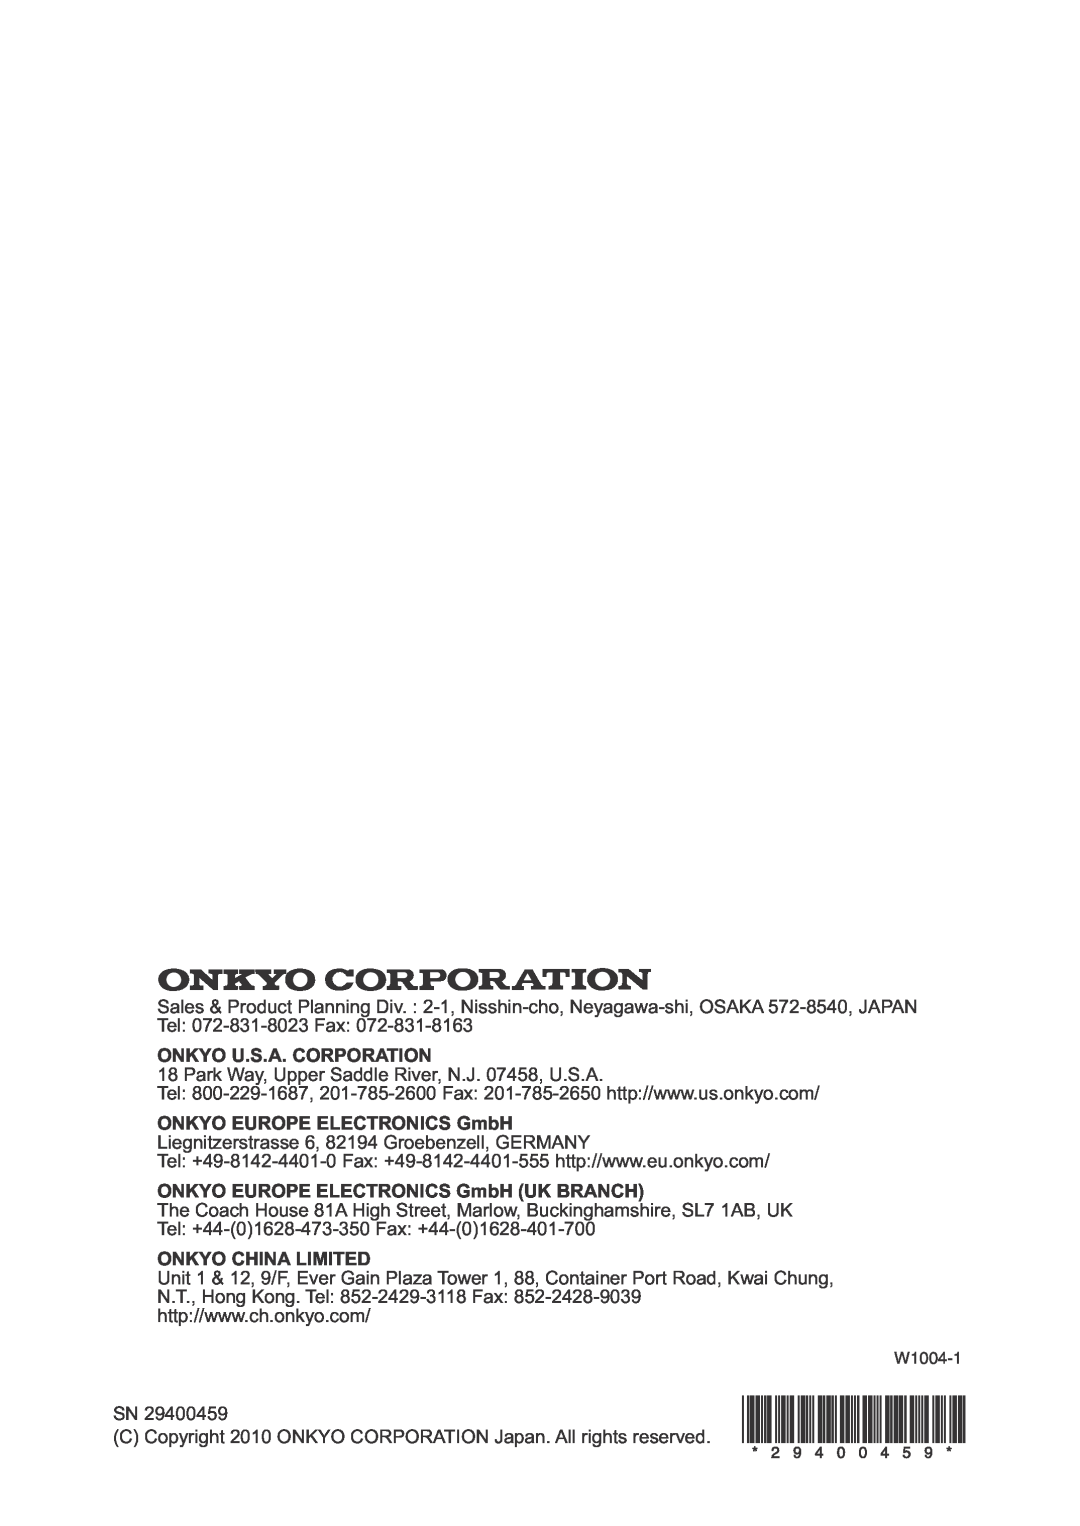 Onkyo CR-445 instruction manual Onkyo U.S.A. Corporation, ONKYO EUROPE ELECTRONICS GmbH UK BRANCH, Onkyo China Limited 